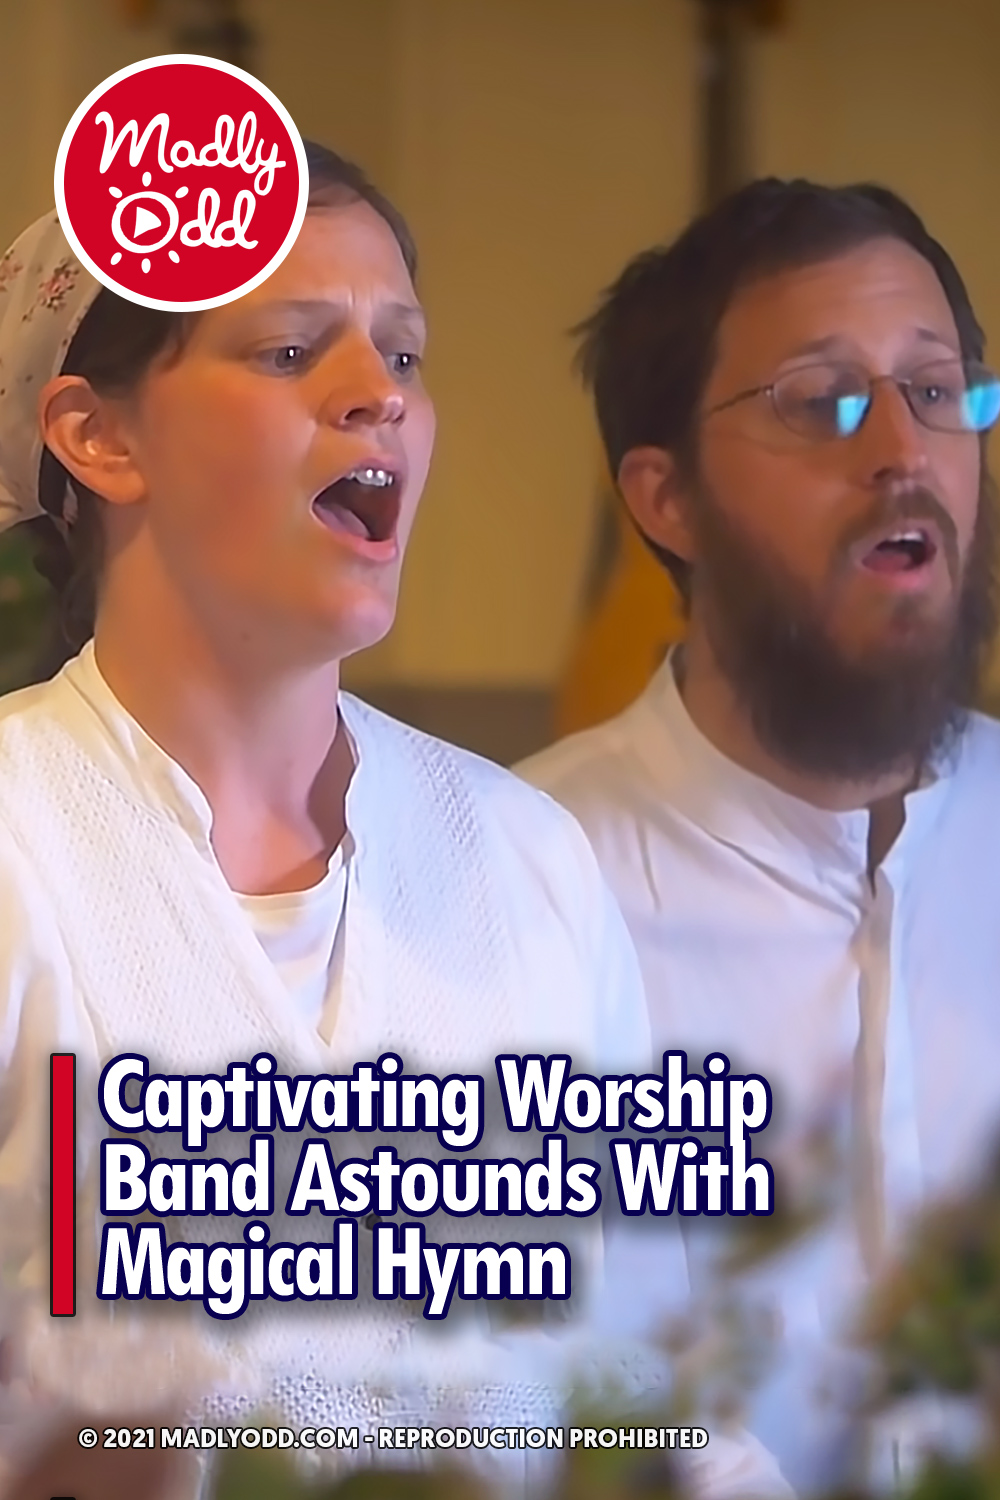 Captivating Worship Band Astounds With Magical Hymn